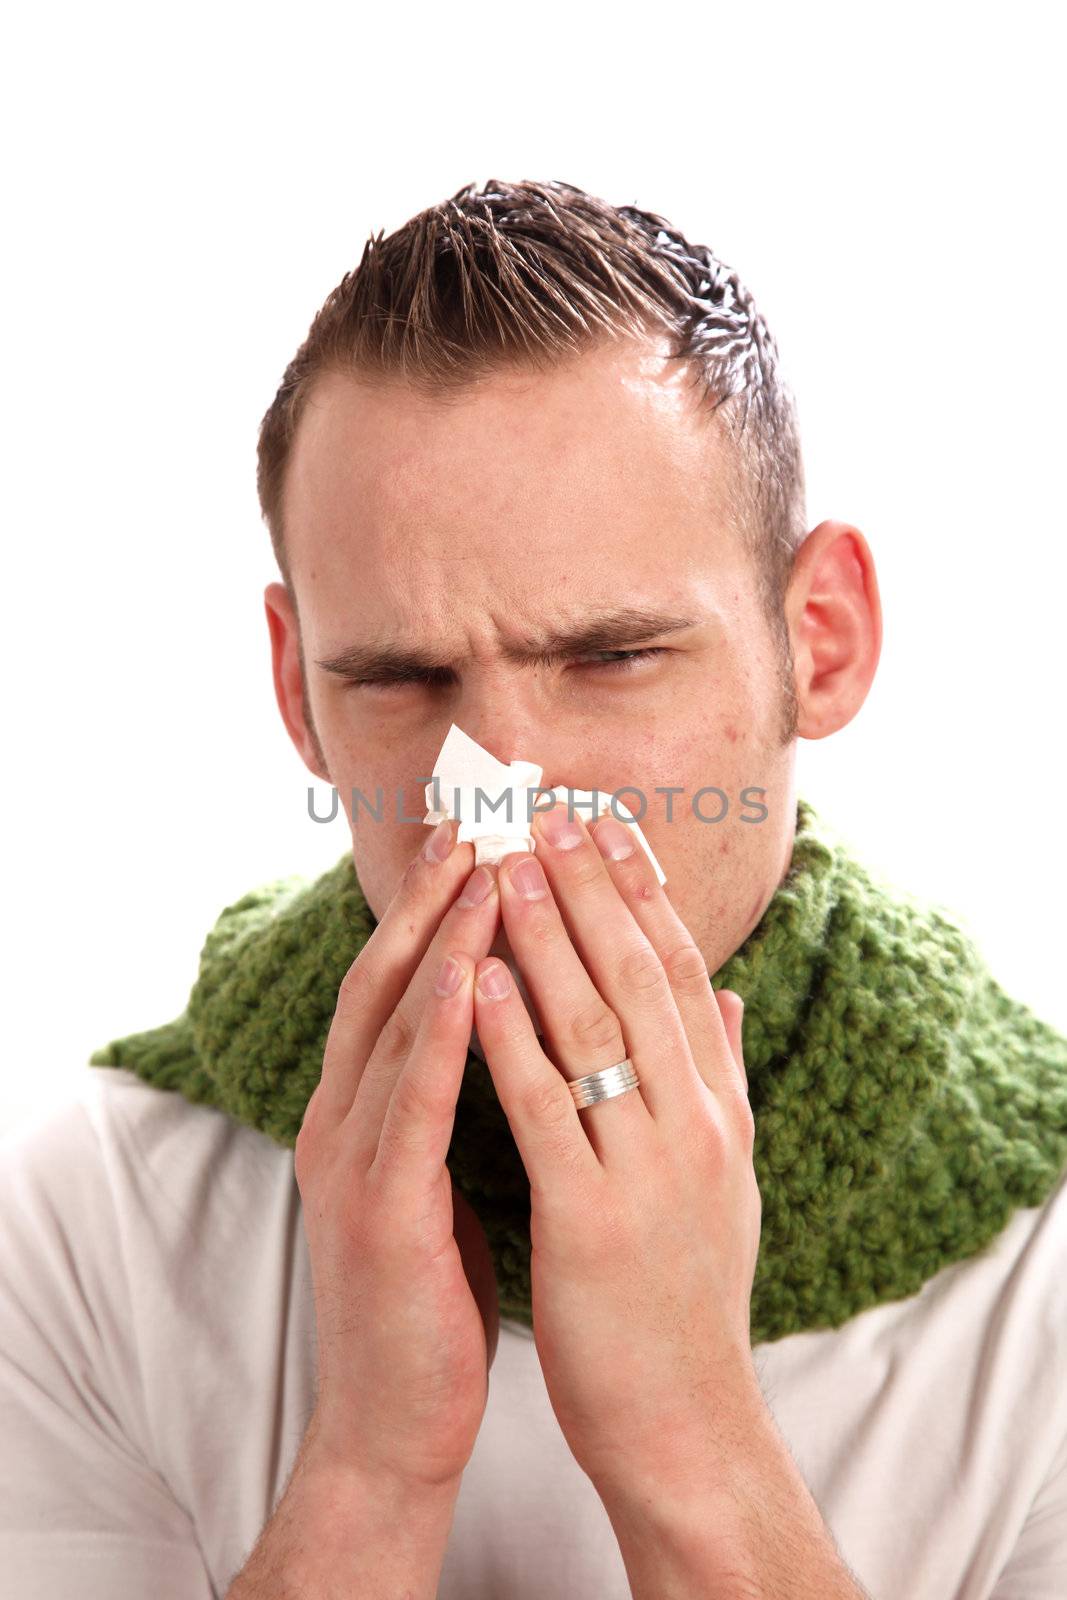 A sick man blows his nose. by Farina6000